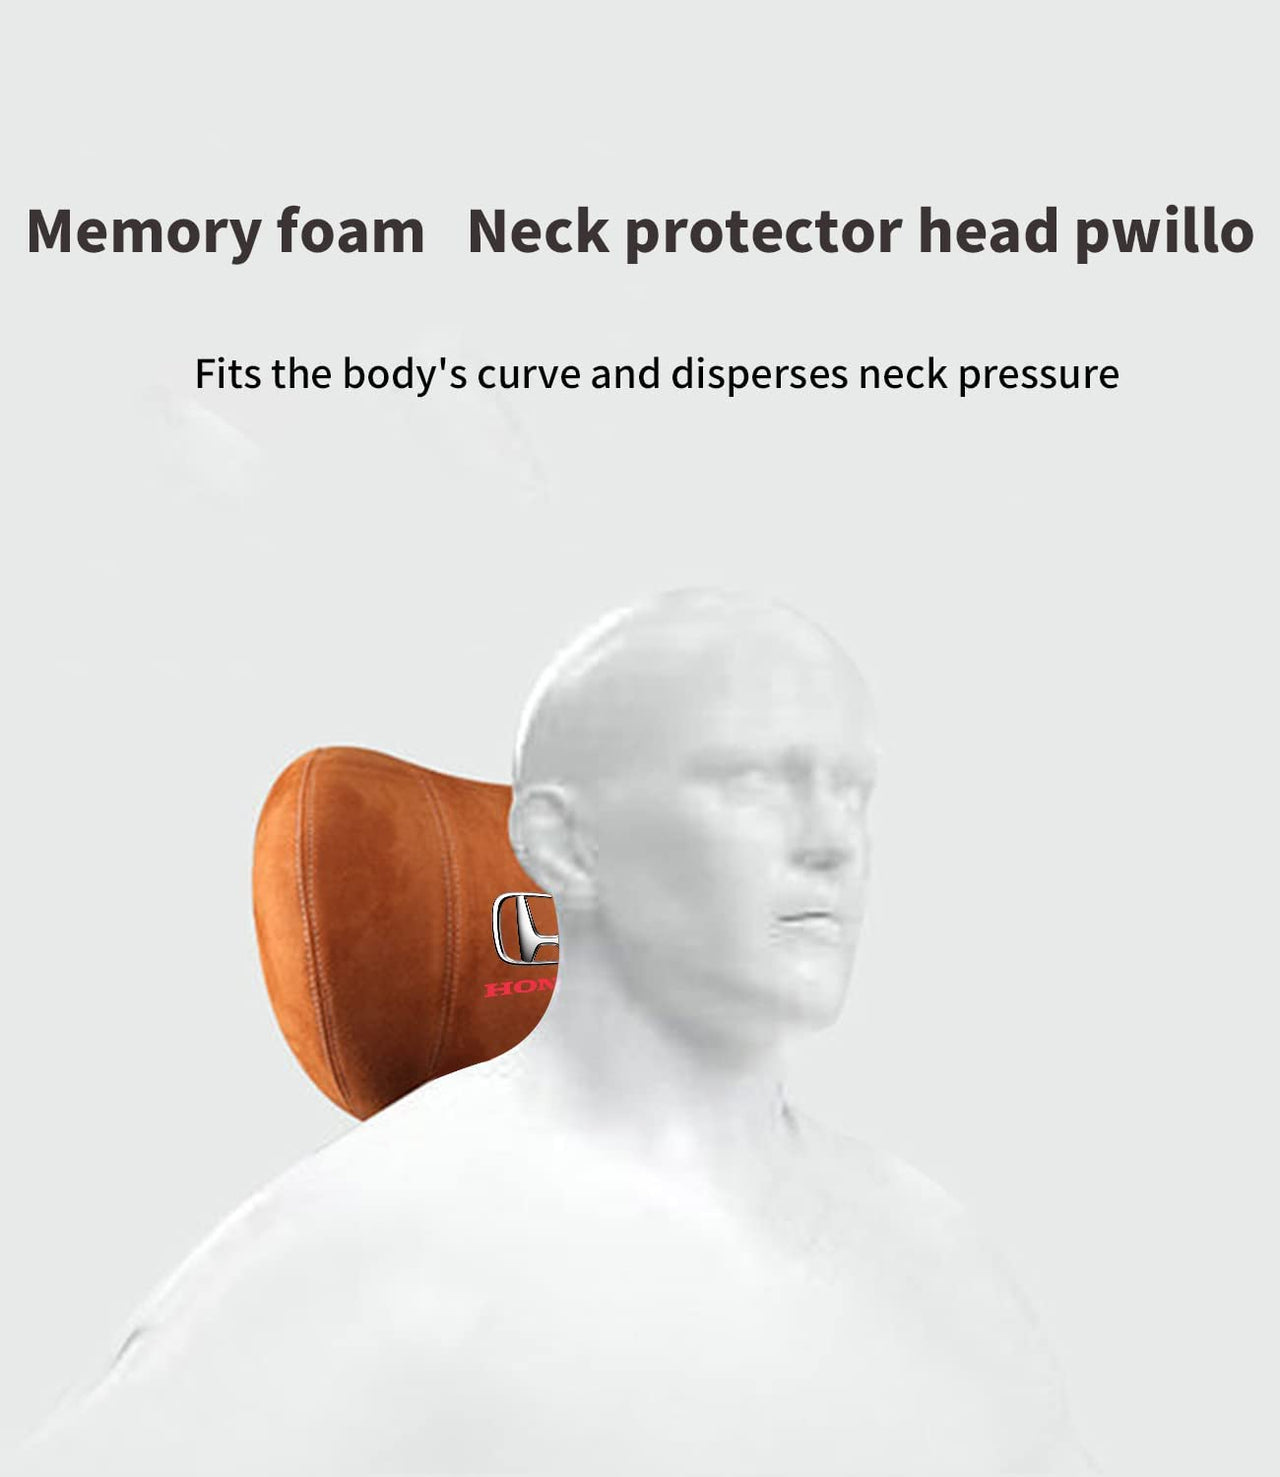 Custom-Fit for Cars, Car Headrest (2 Piece) Premium Memory Foam